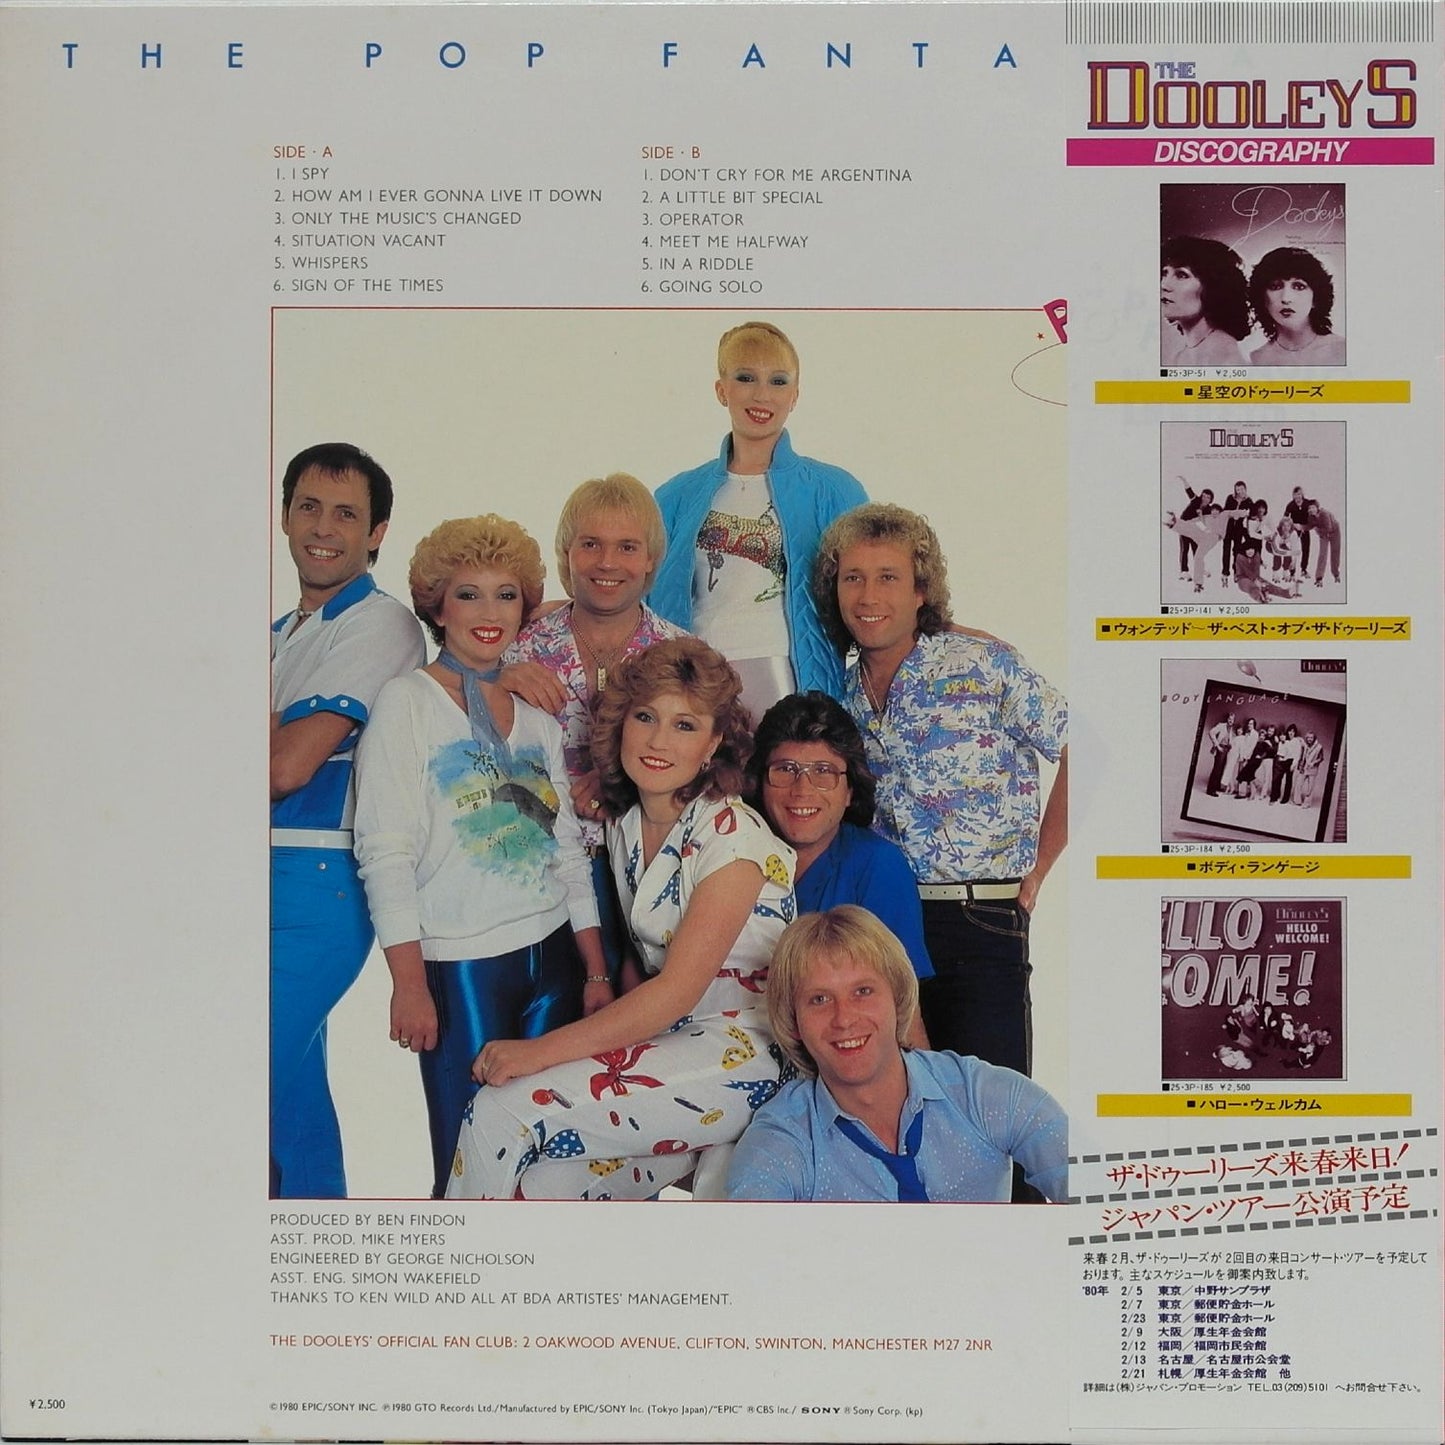 THE DOOLEYS - The Pop Fantasia